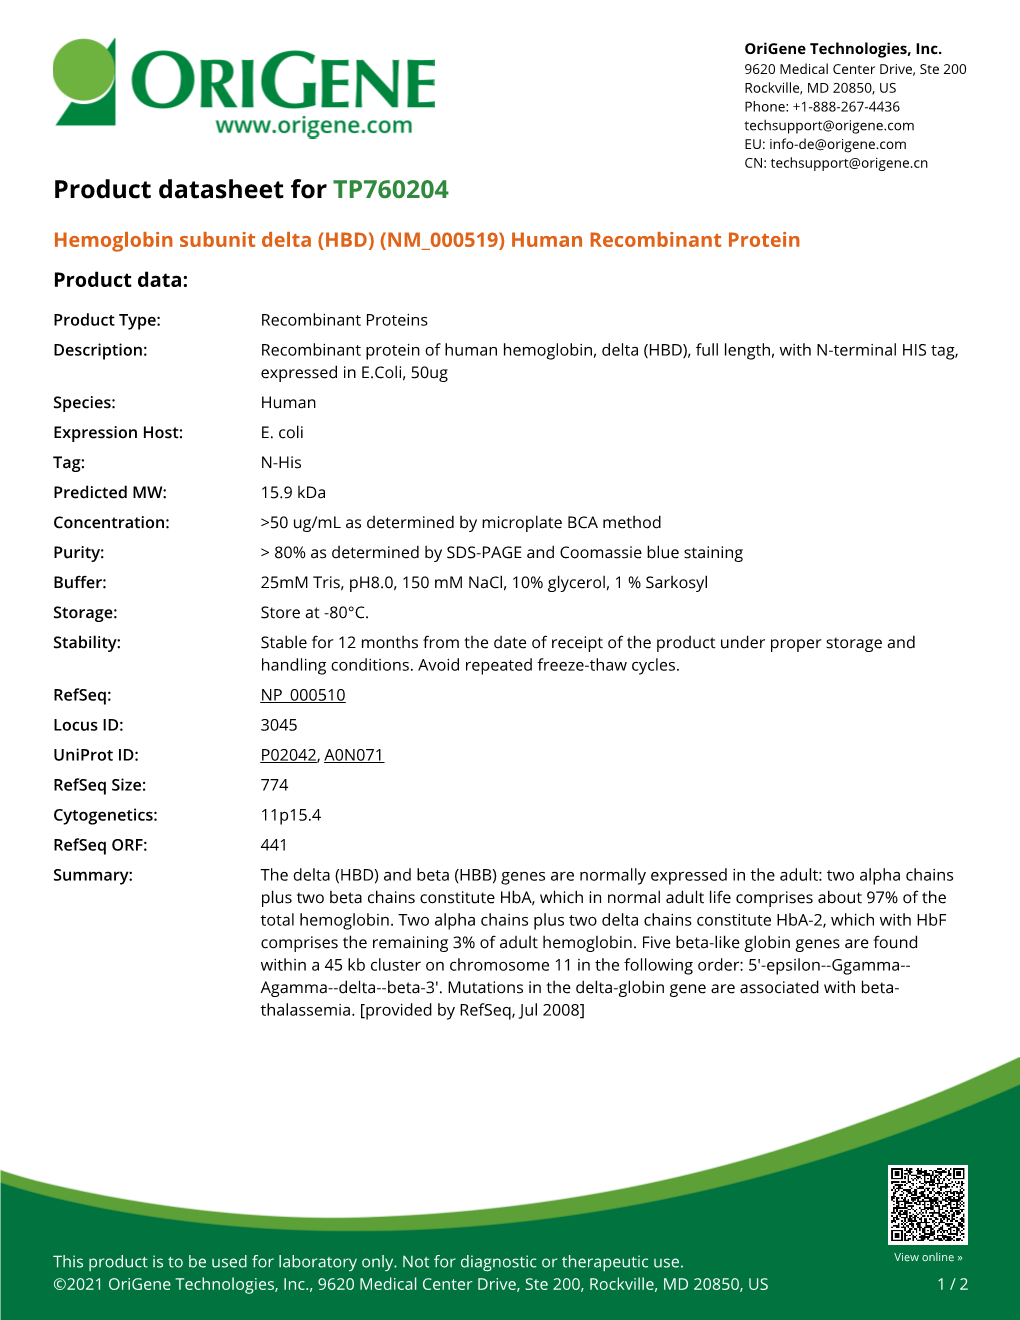 Hemoglobin Subunit Delta (HBD) (NM 000519) Human Recombinant Protein Product Data